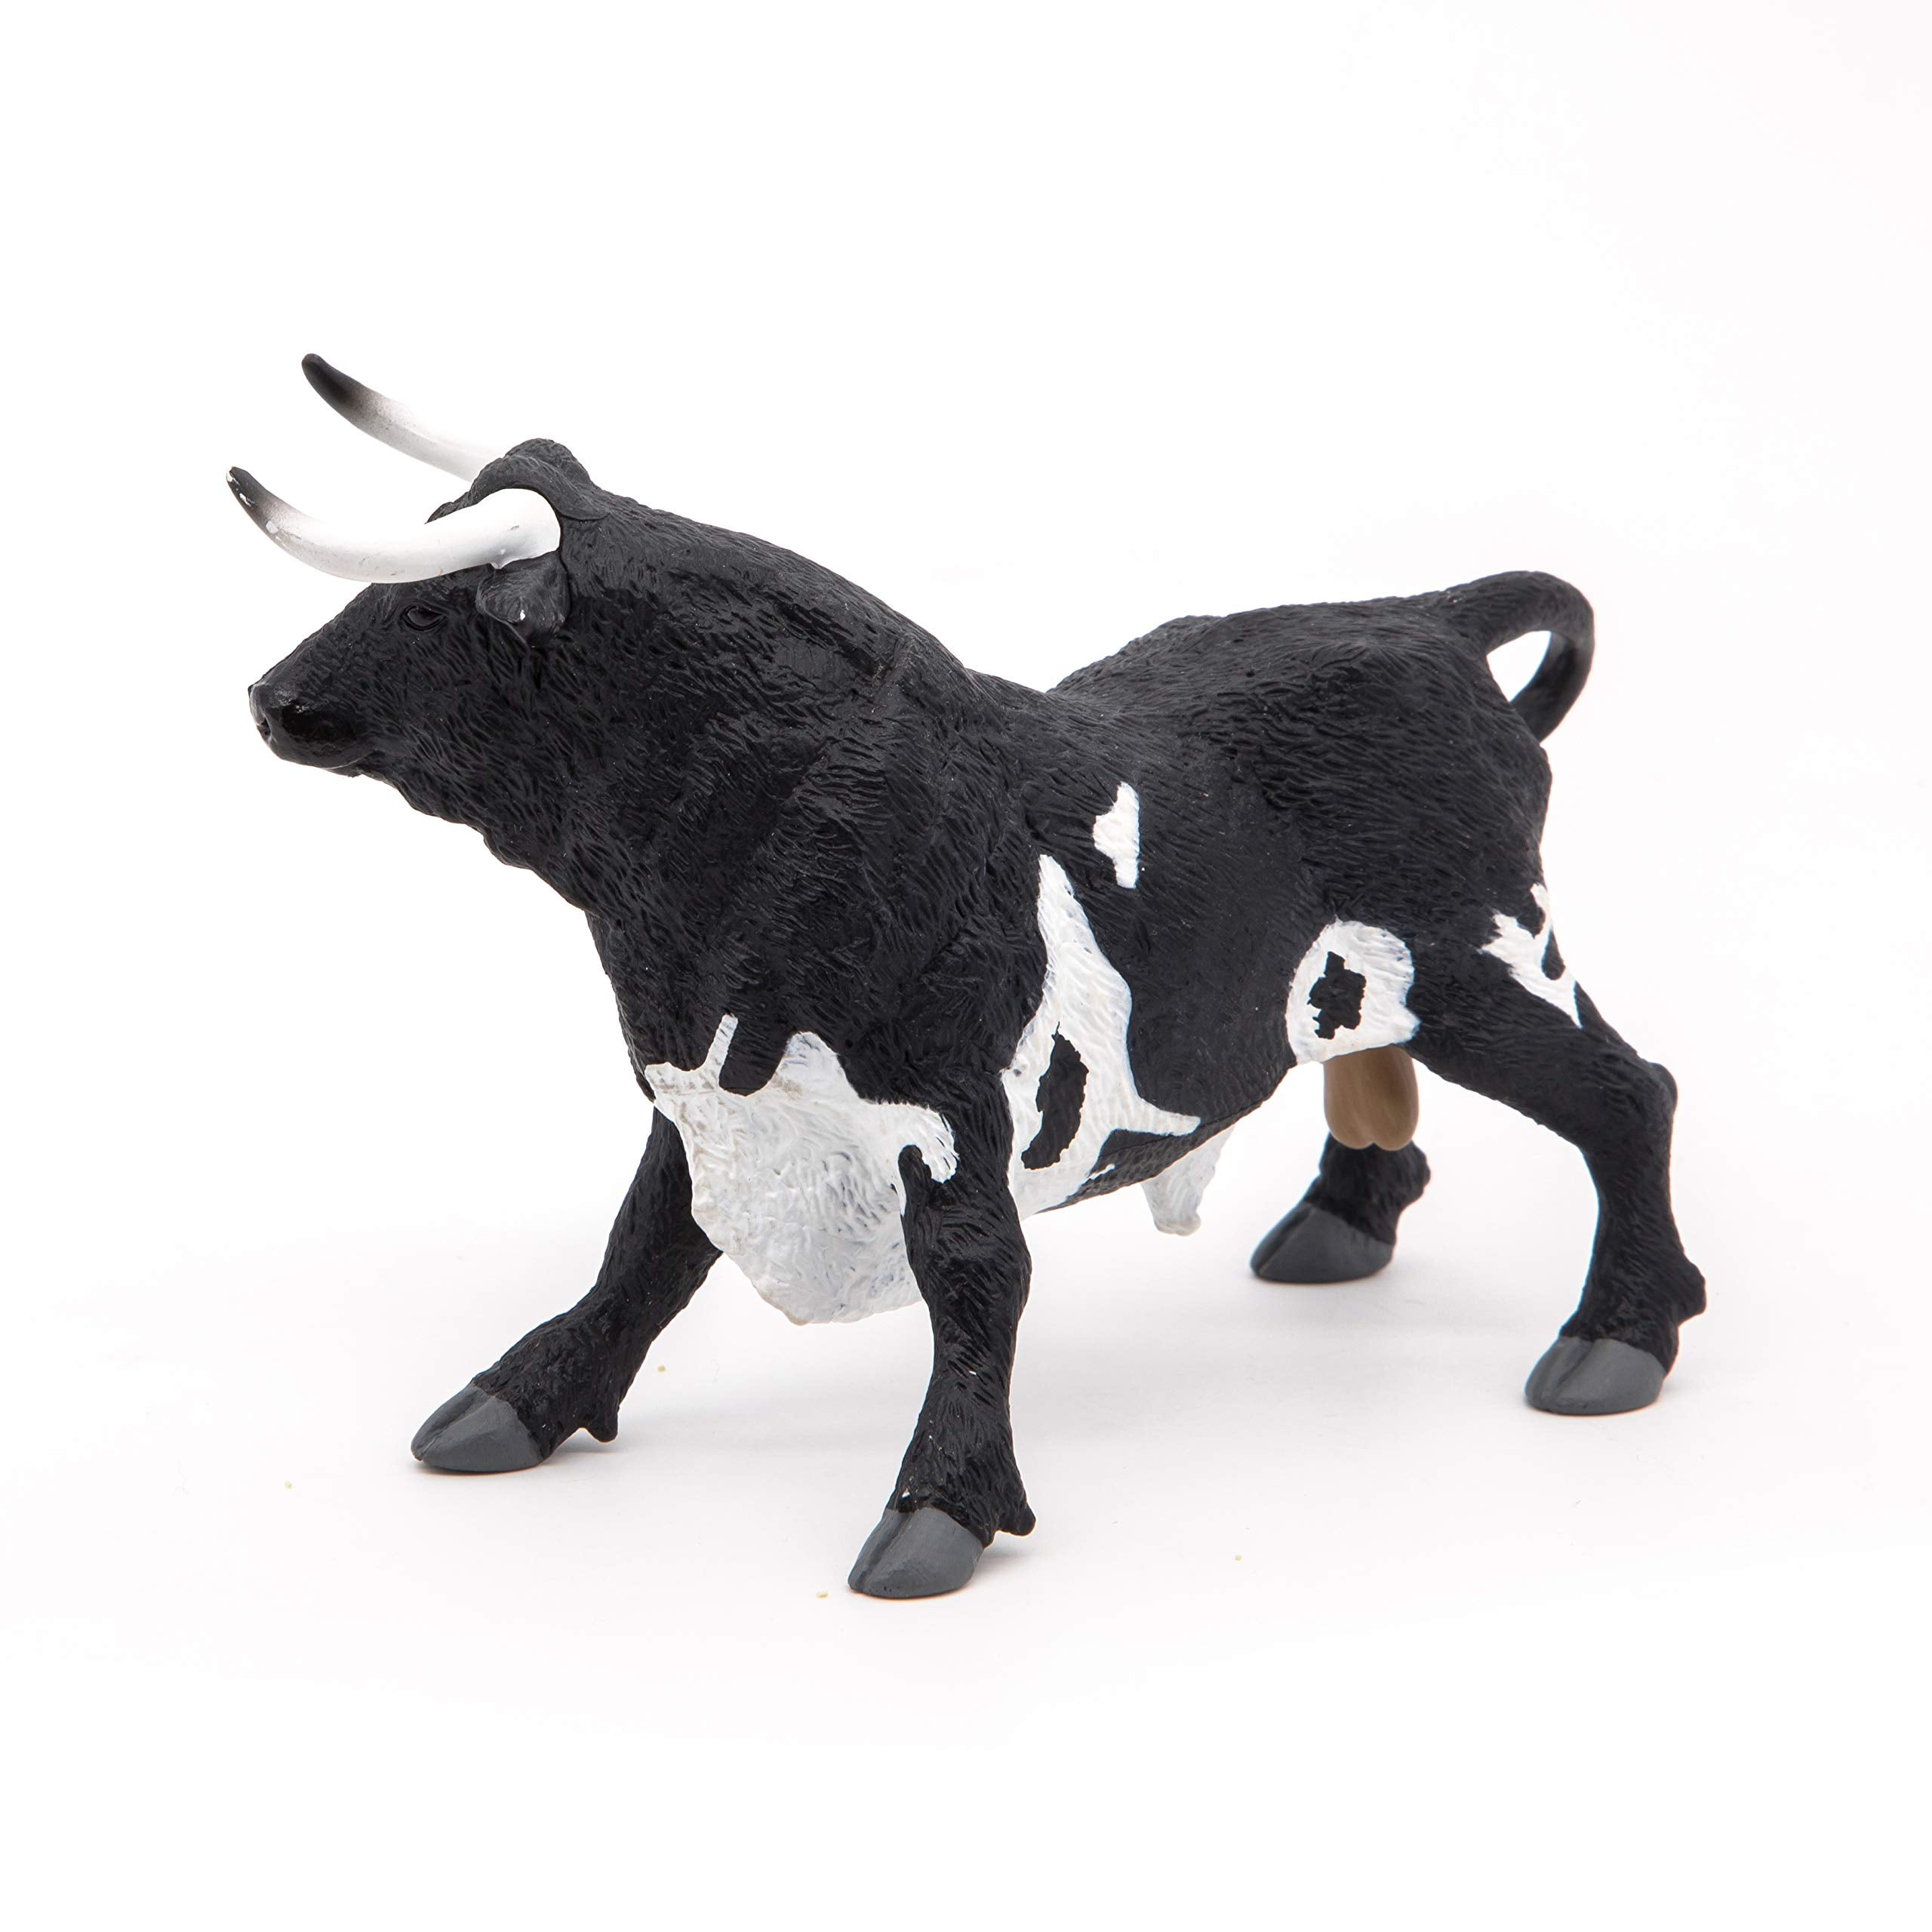 Papo BLACK & WHITE SPANISH BULL solid plastic toy farm pet male animal NEW 